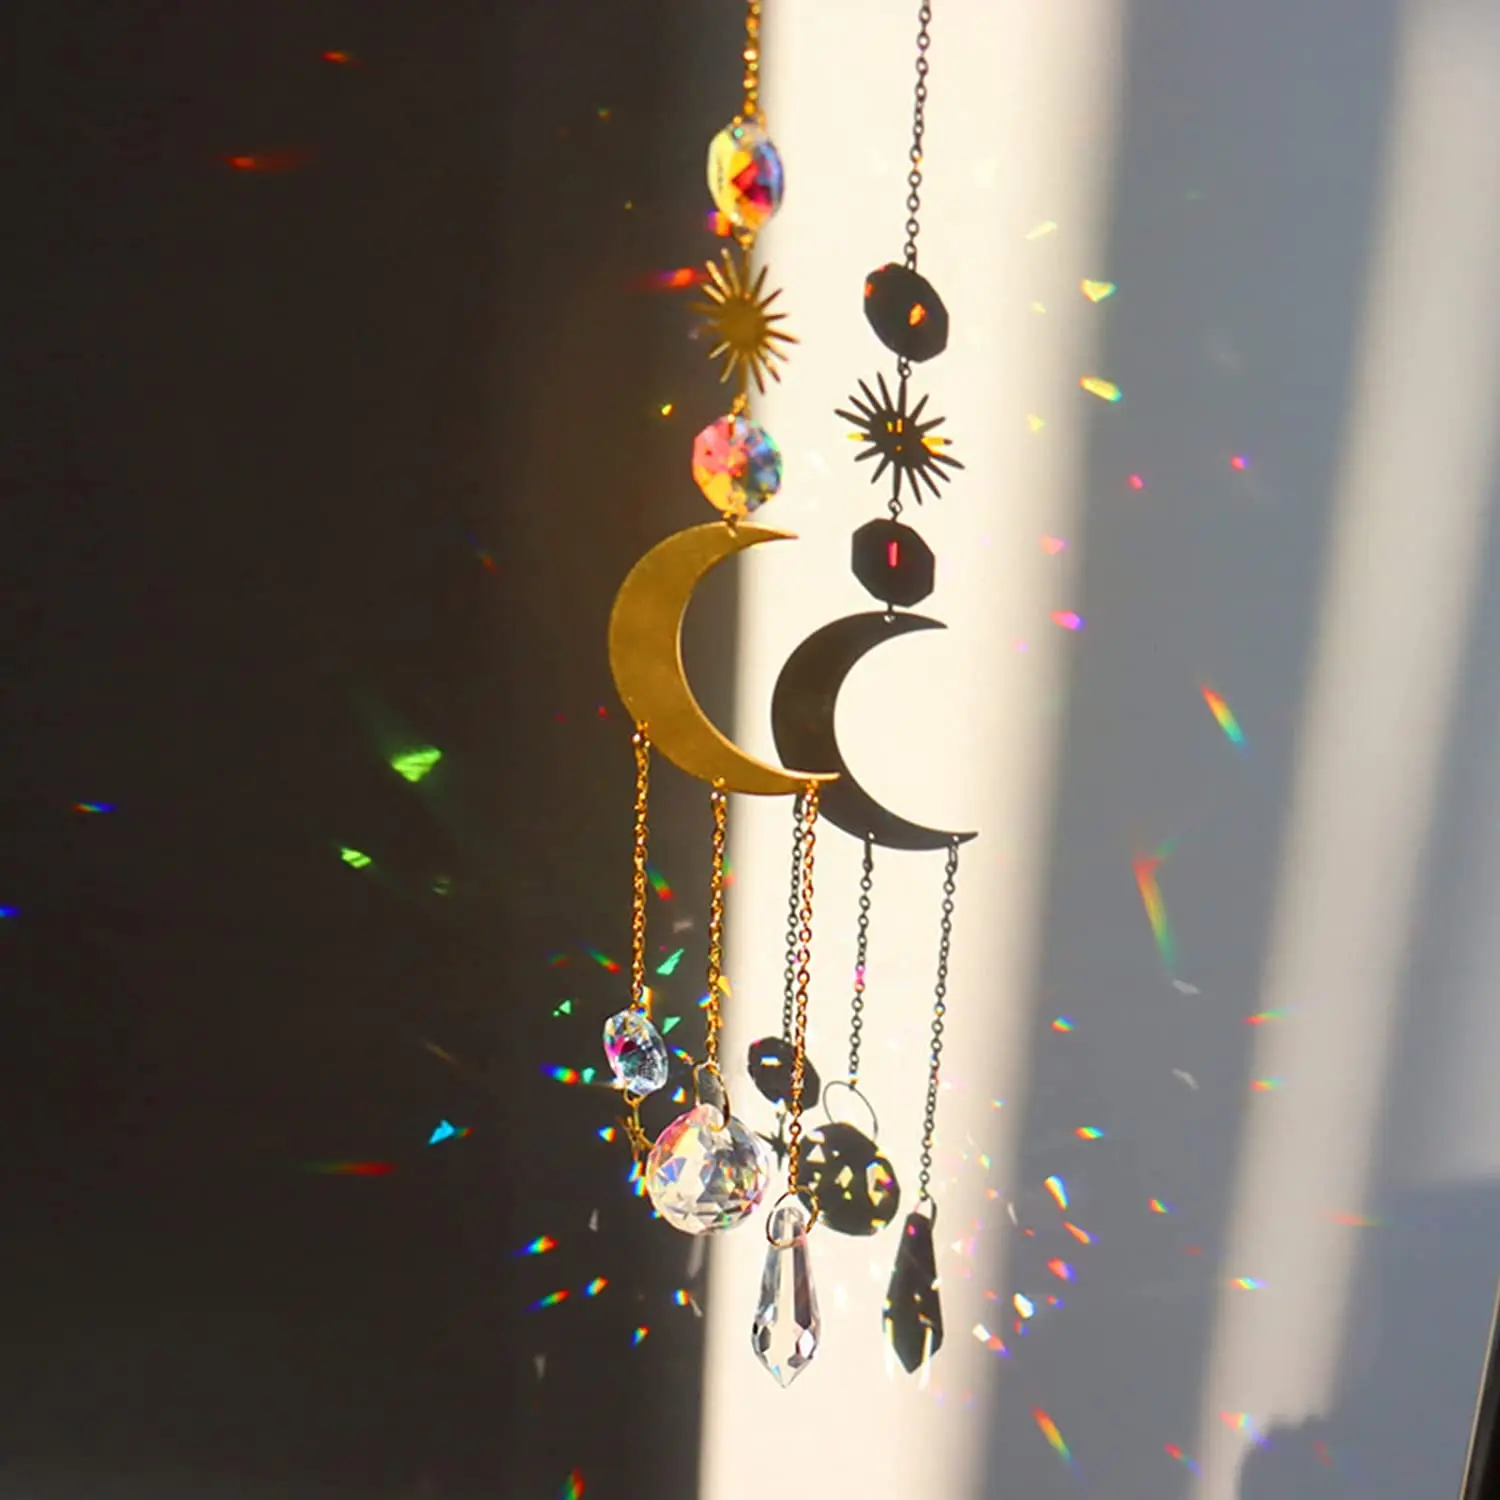 Crystal Moonphase Sun Catcher Glass Hanging Suncatcher Pendant Rainbow Maker Ornament For Home Office Garden Decoration Gift